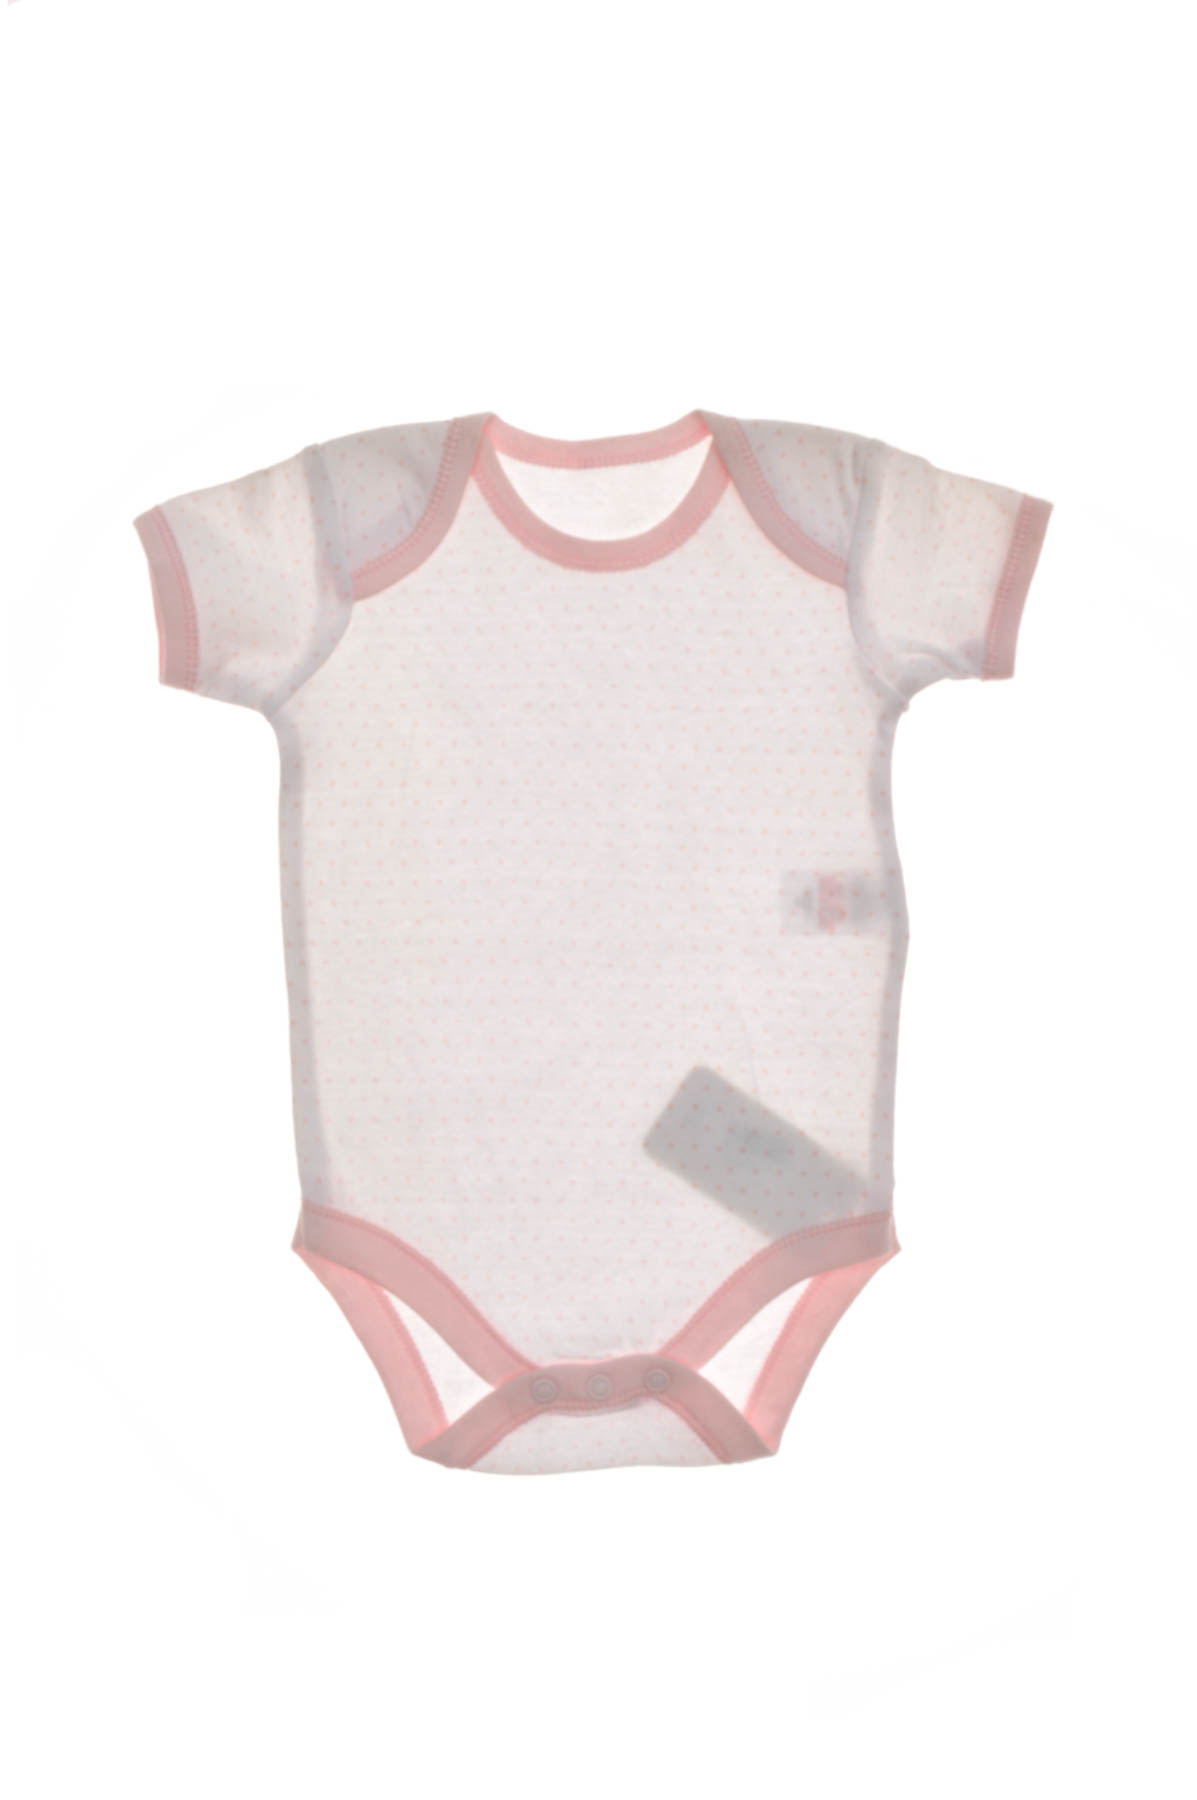 Baby's bodysuit - Pitter Patter - 0